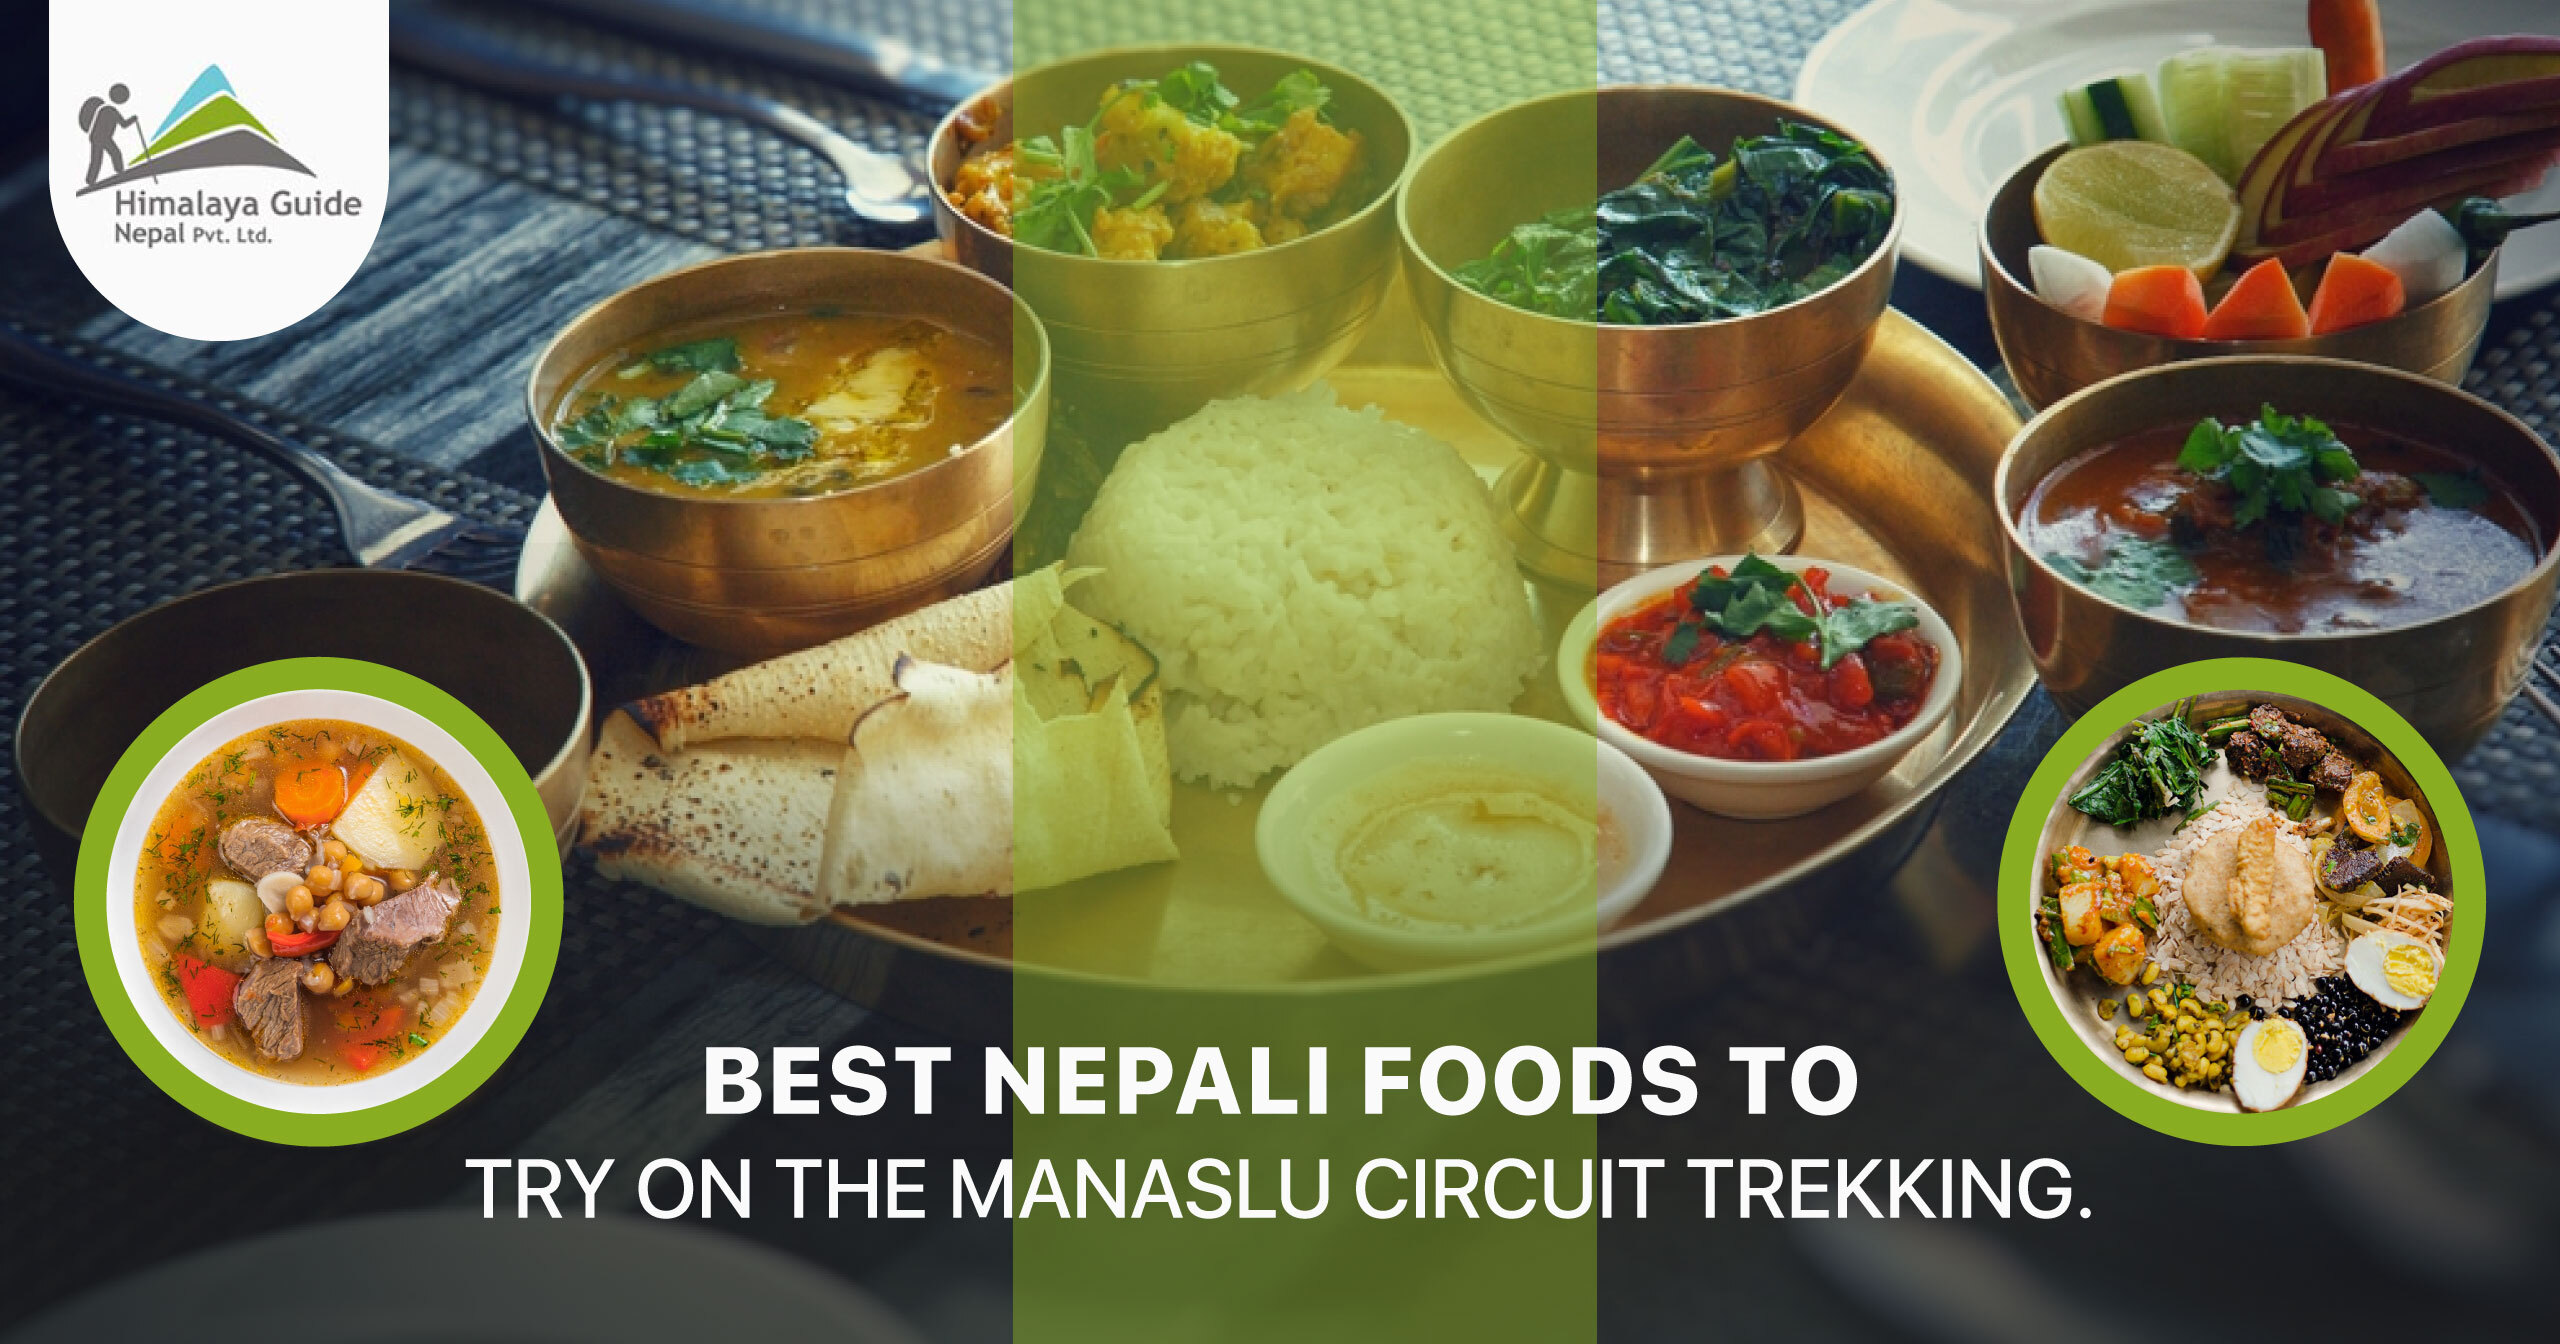 Best Nepali Foods to Try on the Manaslu Circuit Trekking